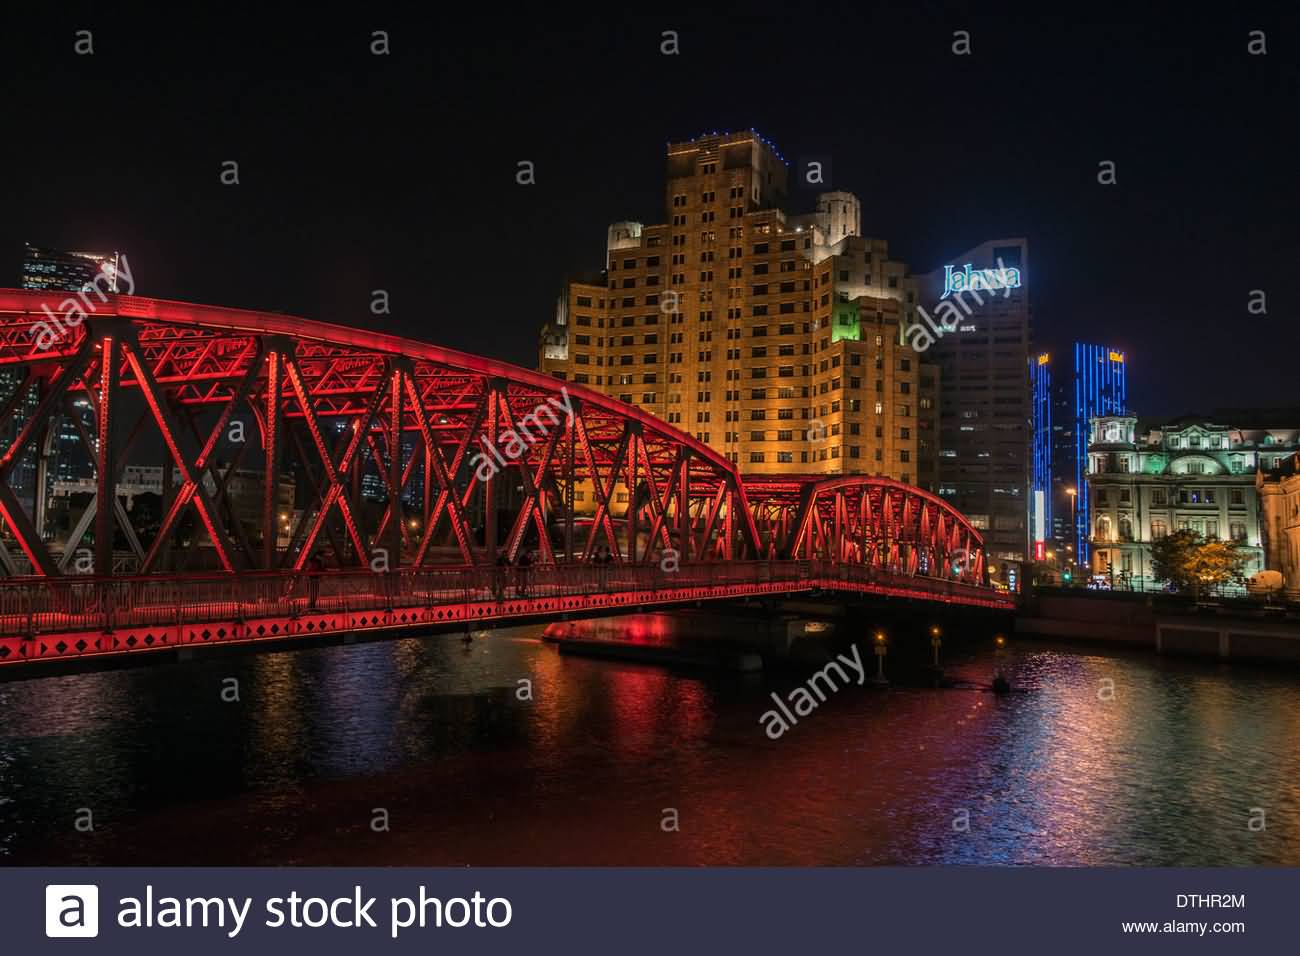 Waibaidu Steel Truss Bridge At Night With Red Lights